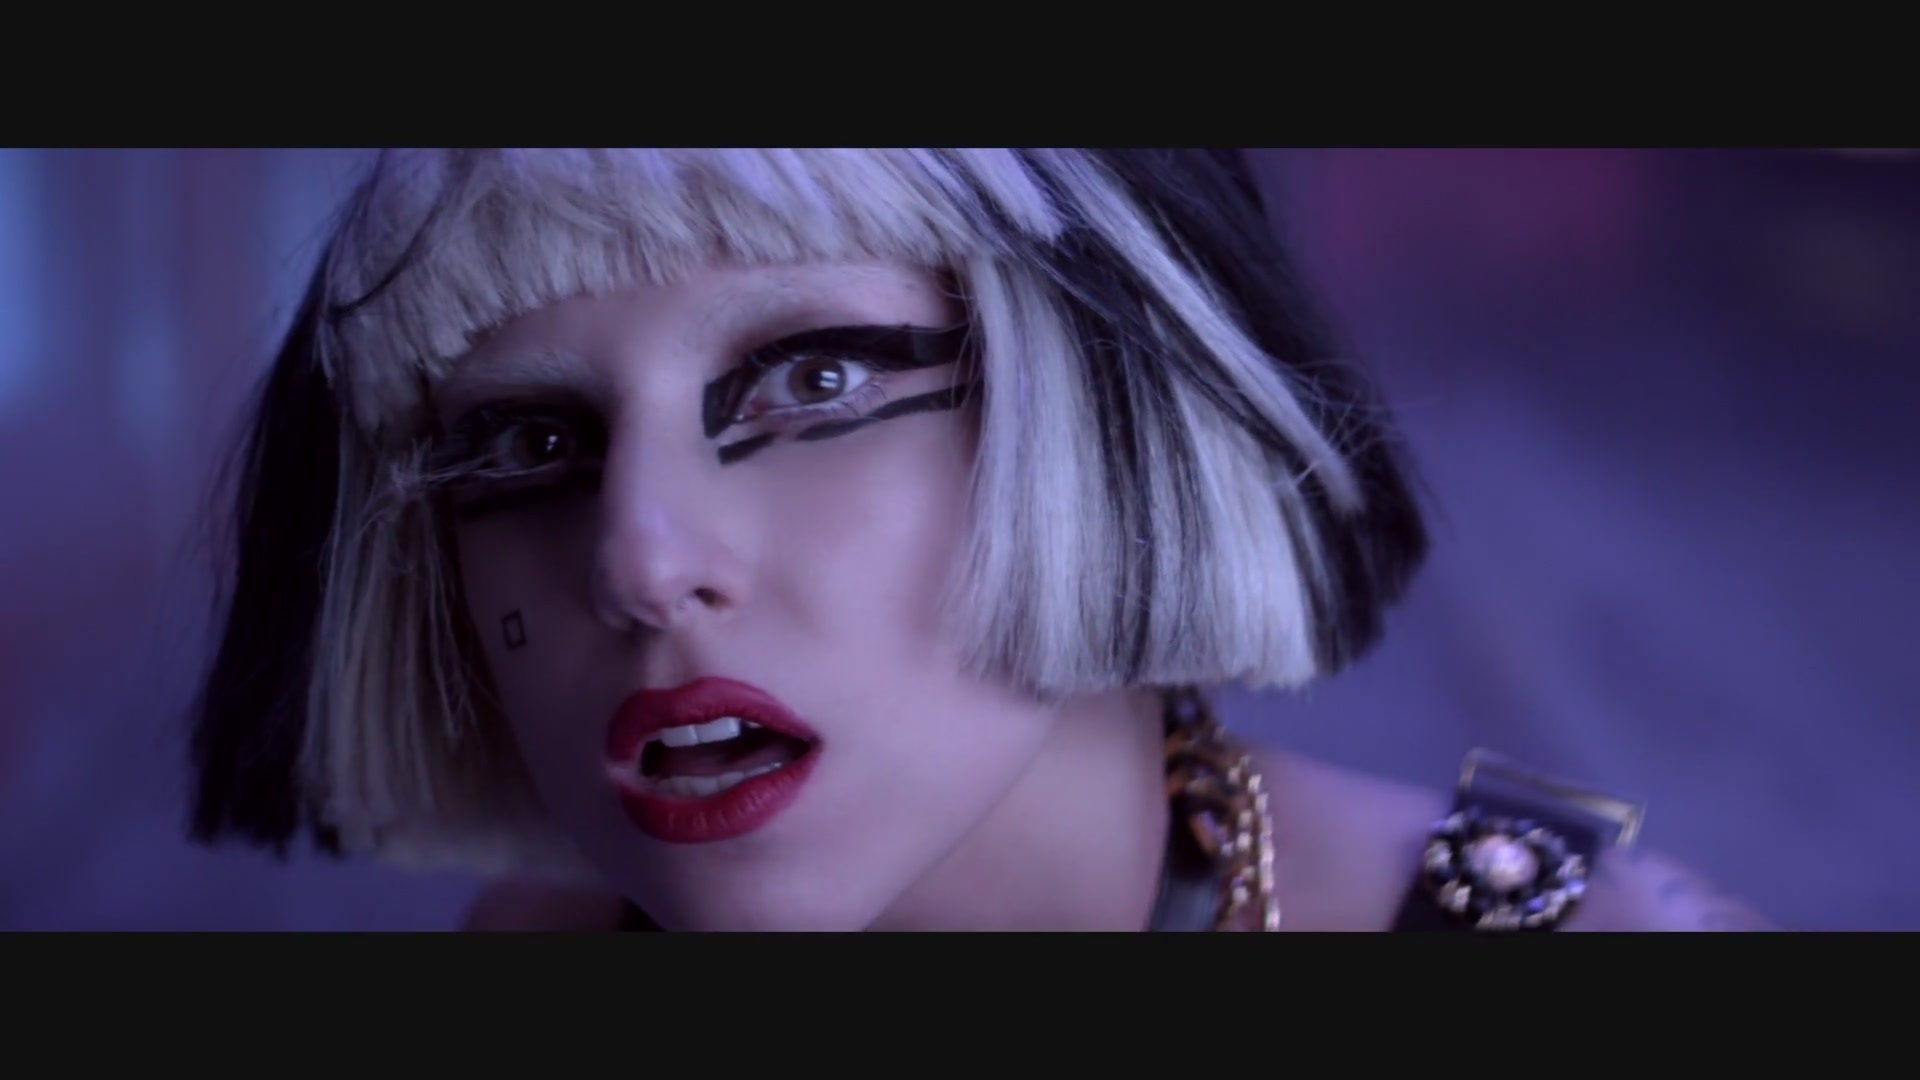 Найти клип по сюжету. Lady Gaga. Леди Гага клипы. The Edge of Glory леди Гага. Леди Гага в клипе Покер фейс.